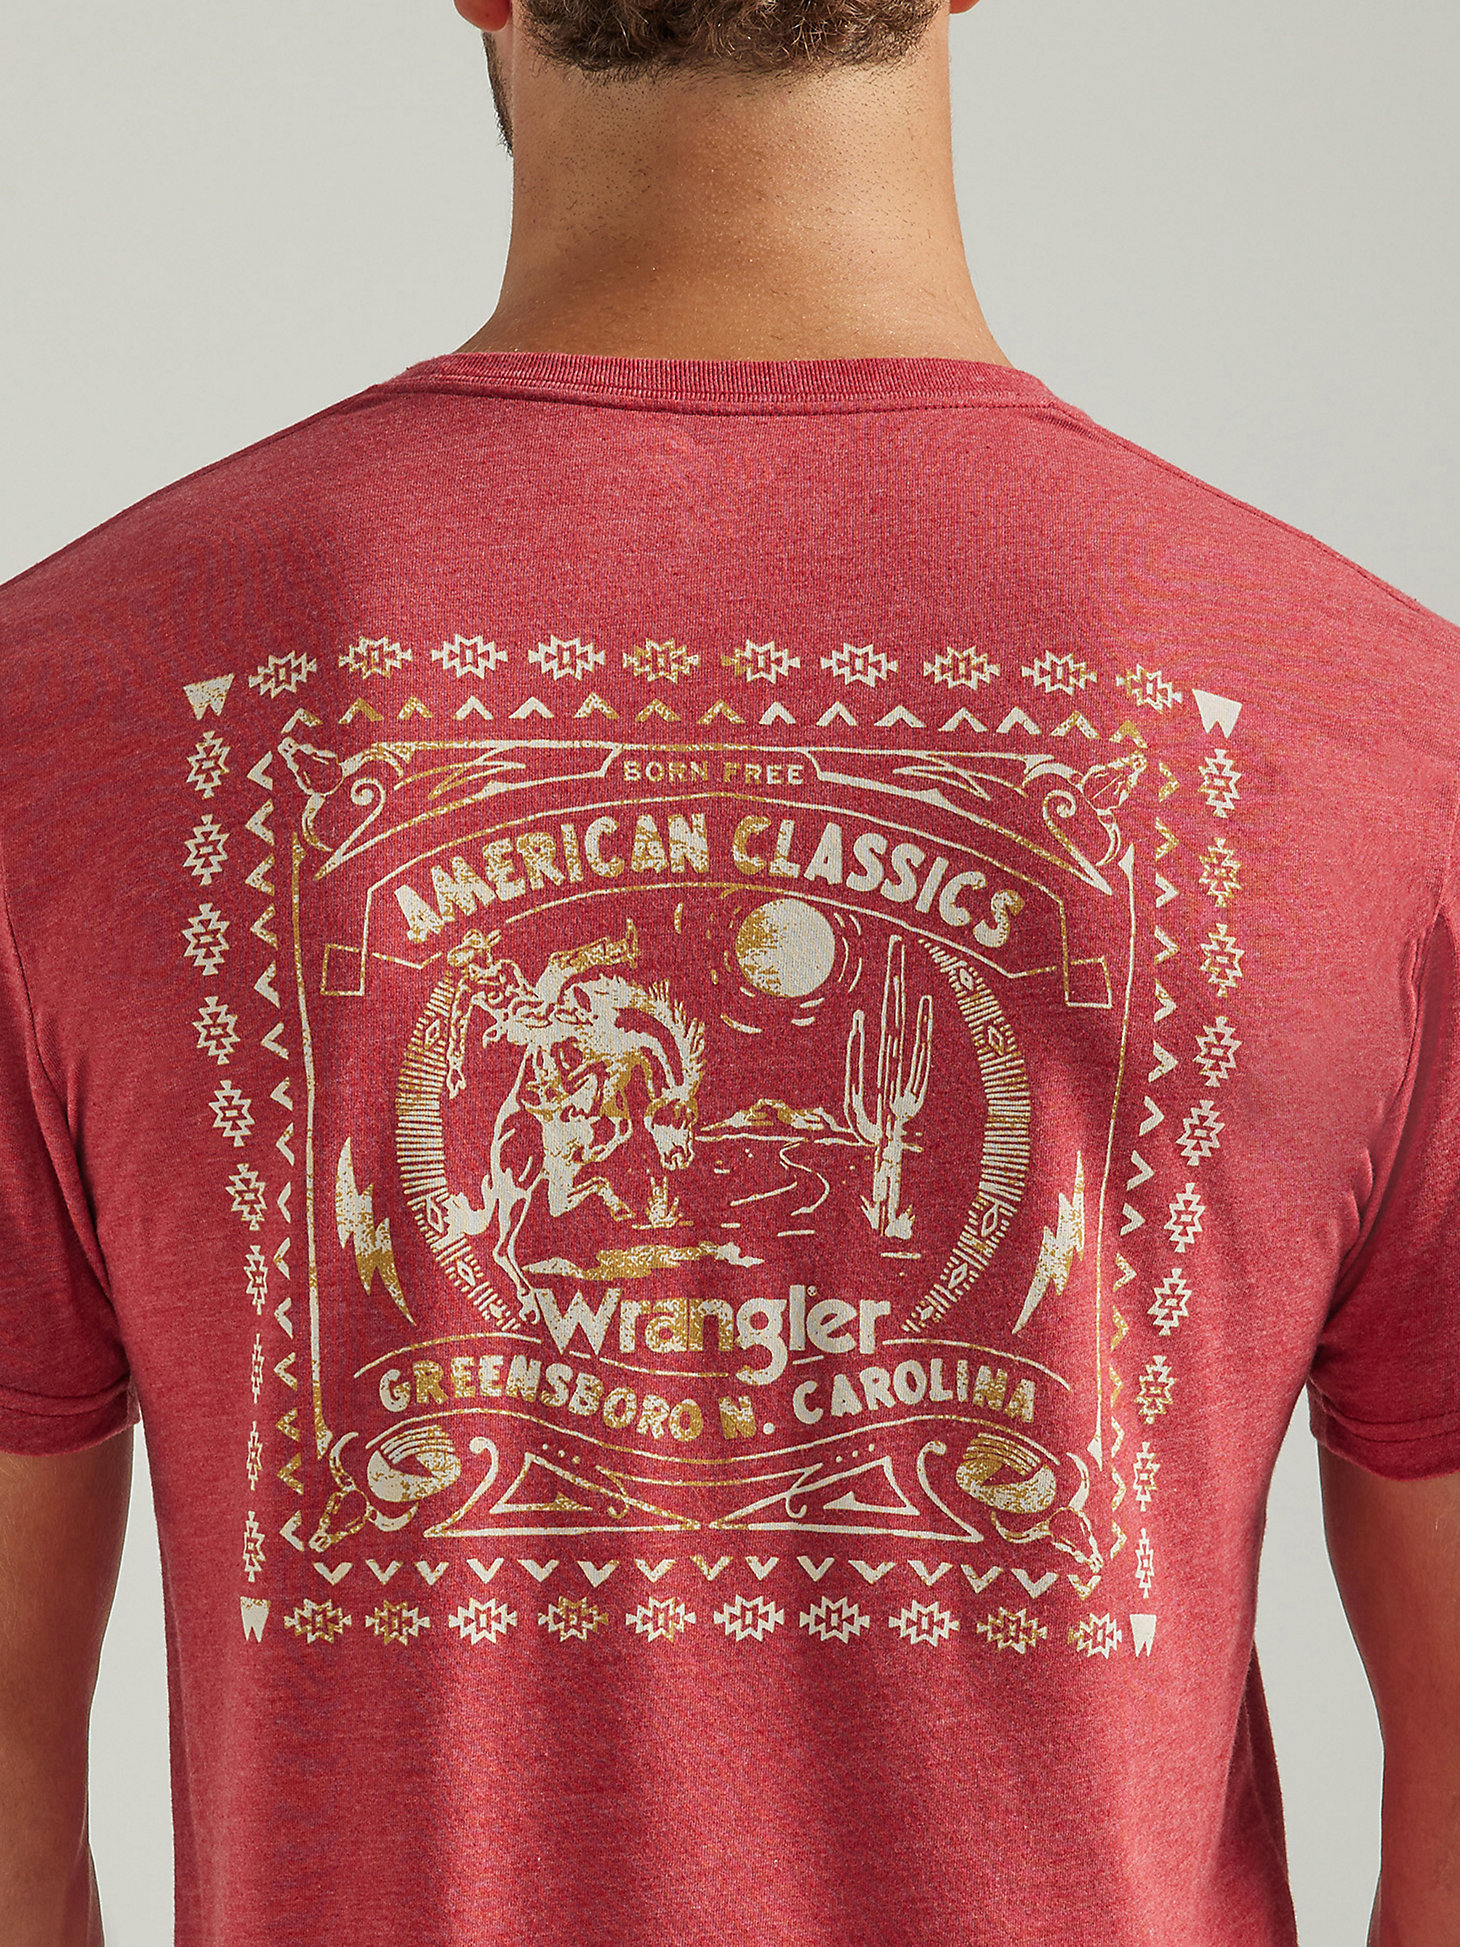 Men's Wrangler American Classic Graphic T-Shirt in Brick Red Heather alternative view 3